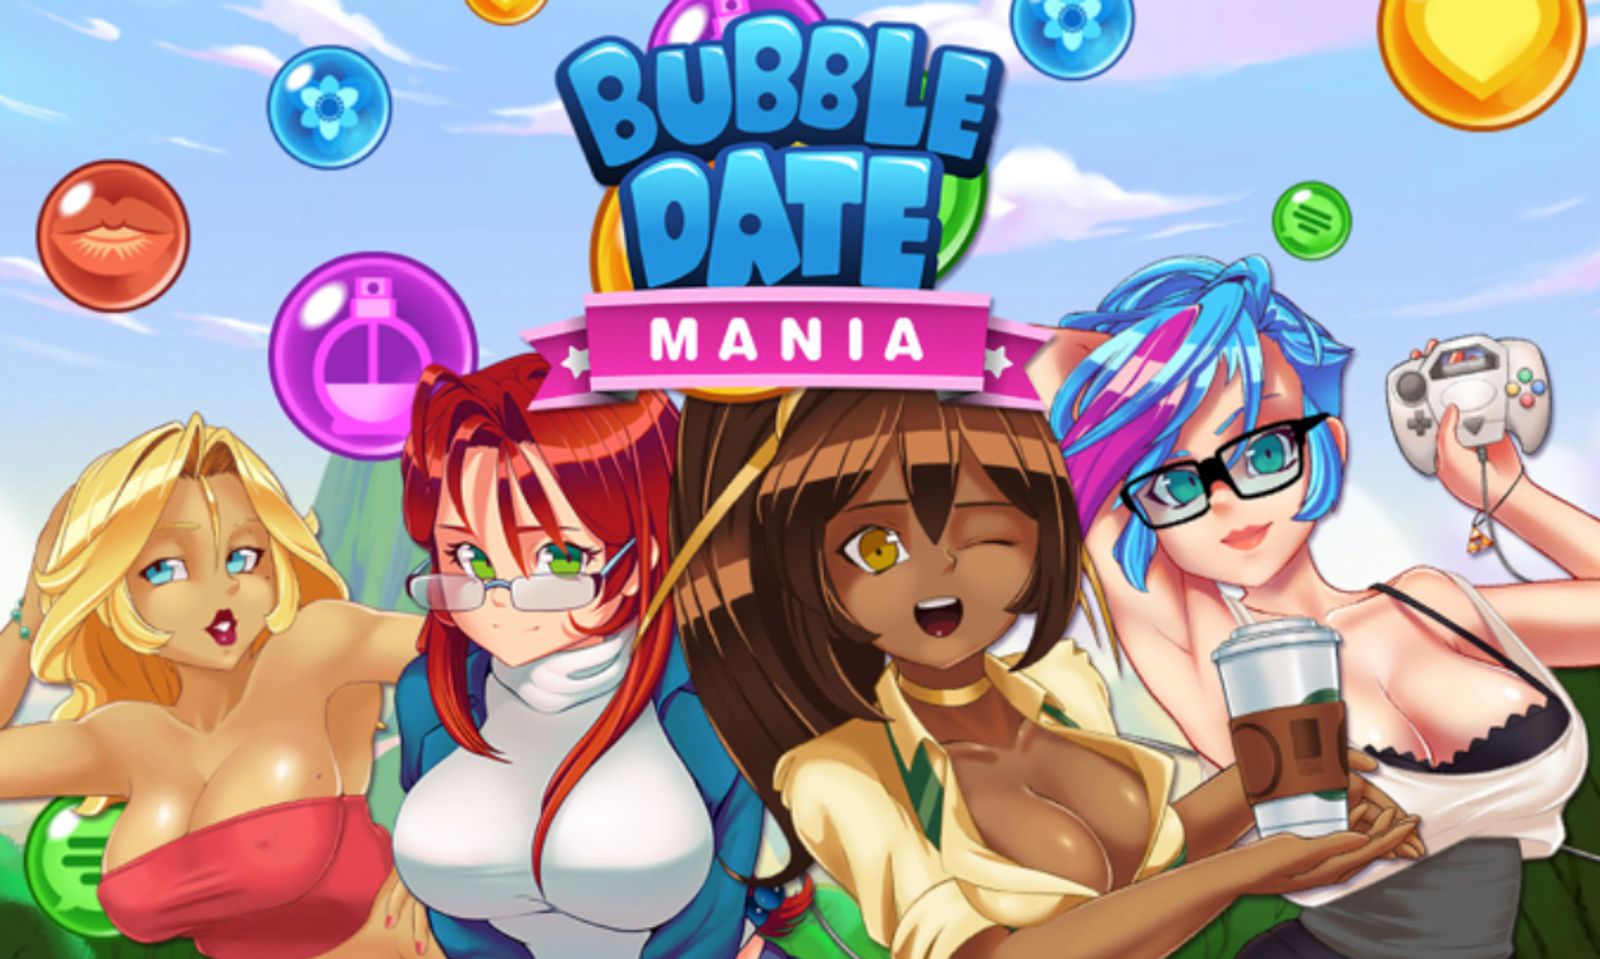 Bubble Date Mania Launches May 1 on Nutaku